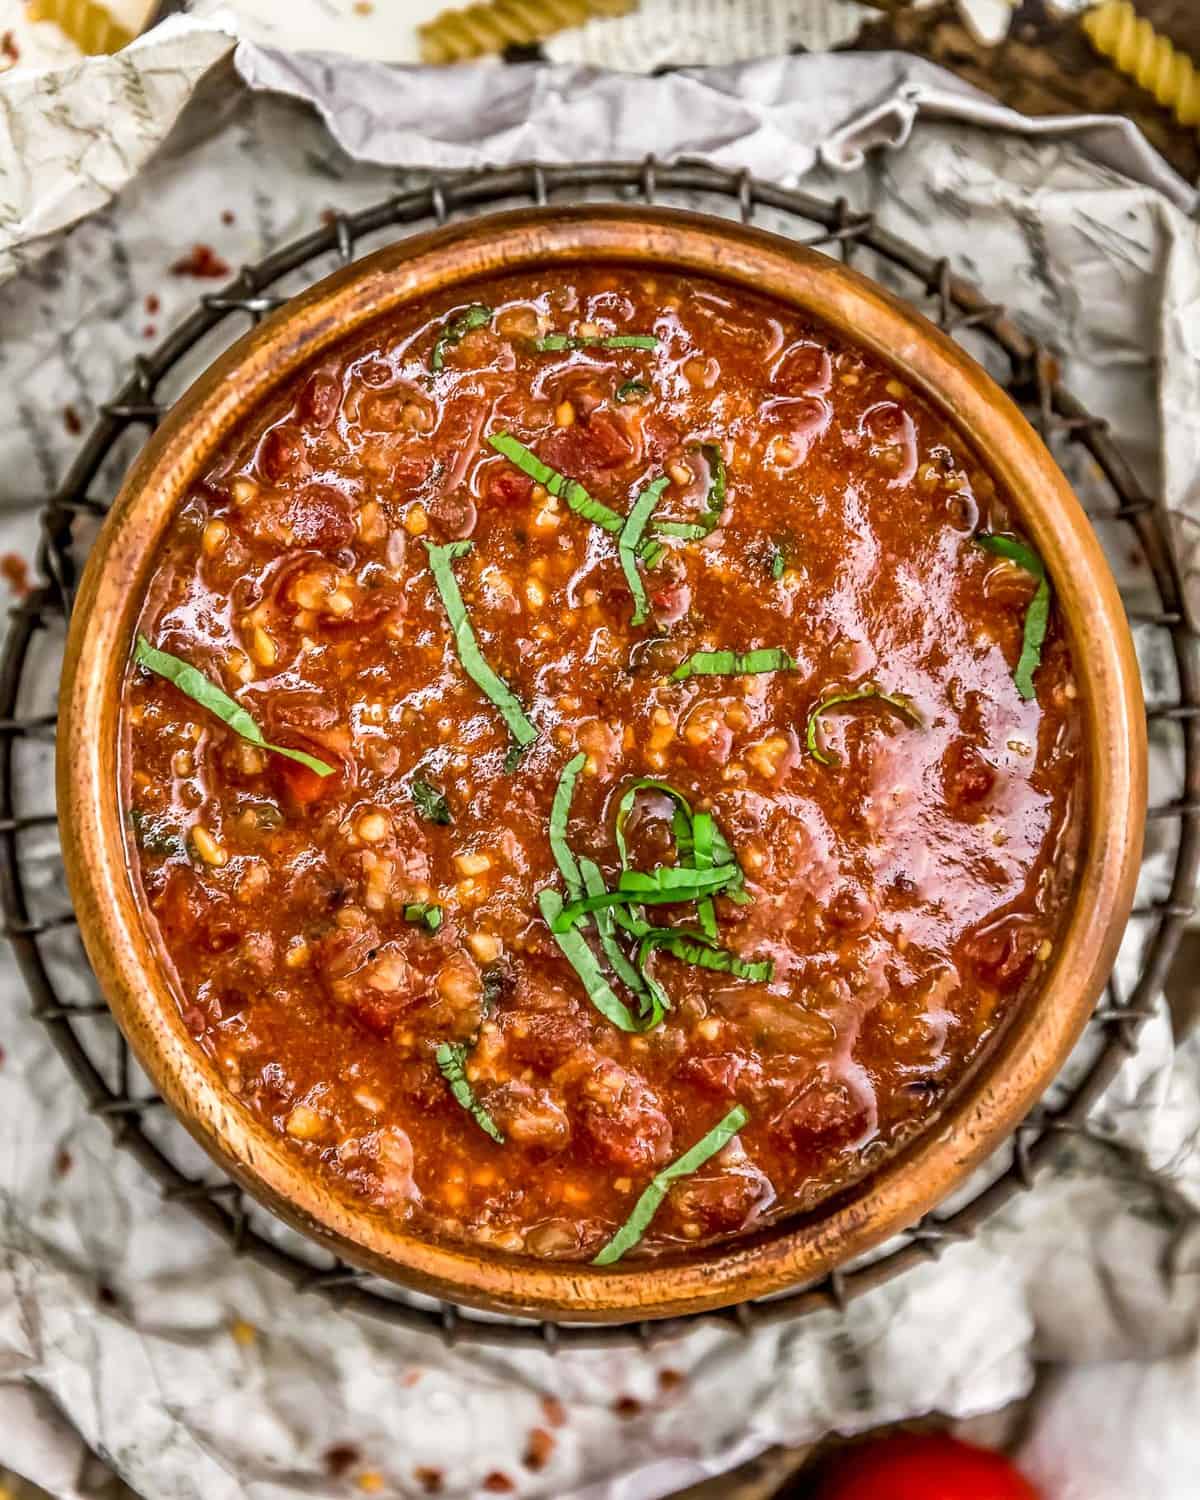 Spicy Arrabbiata Sauce in a bowl